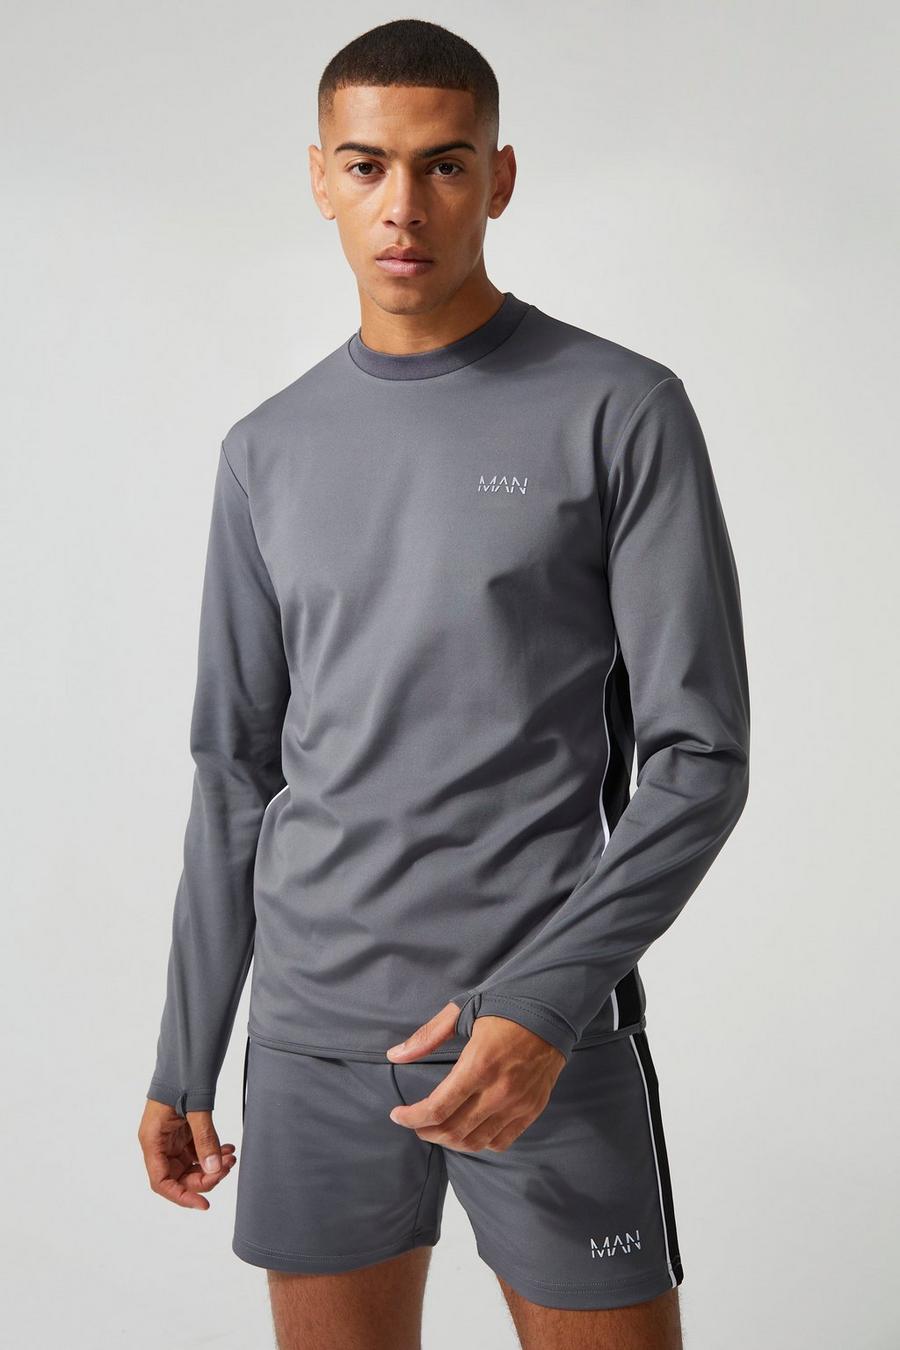 Man Active Fußball Trainings-Sweatshirt, Charcoal grau